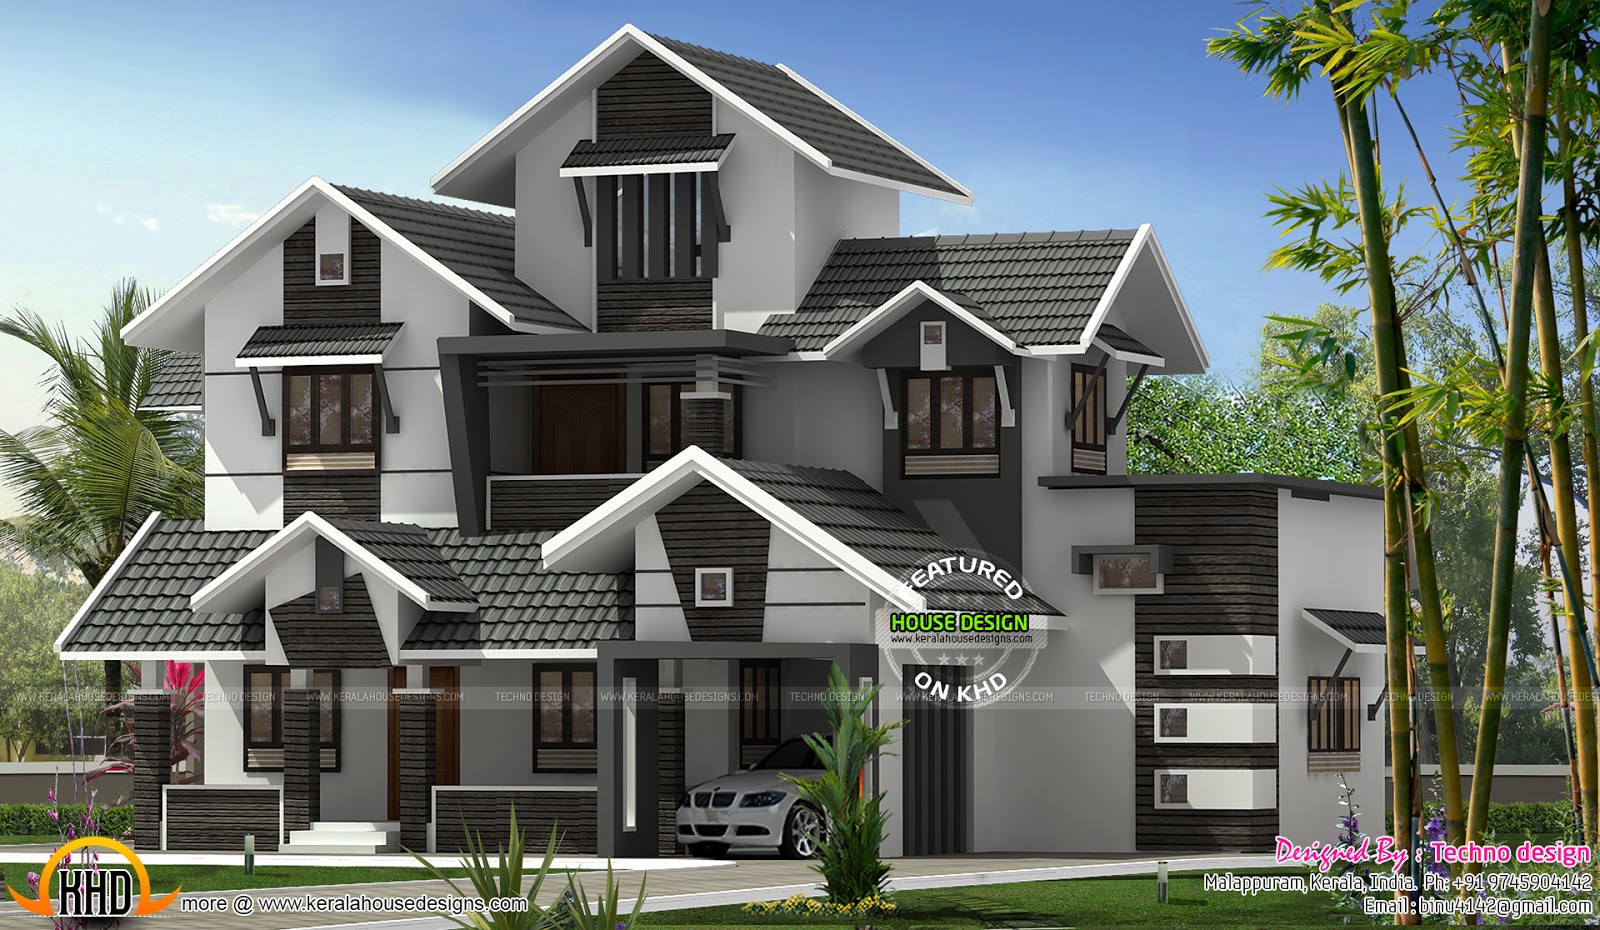 Modern Kerala home design - Kerala home design and floor plans - 8000